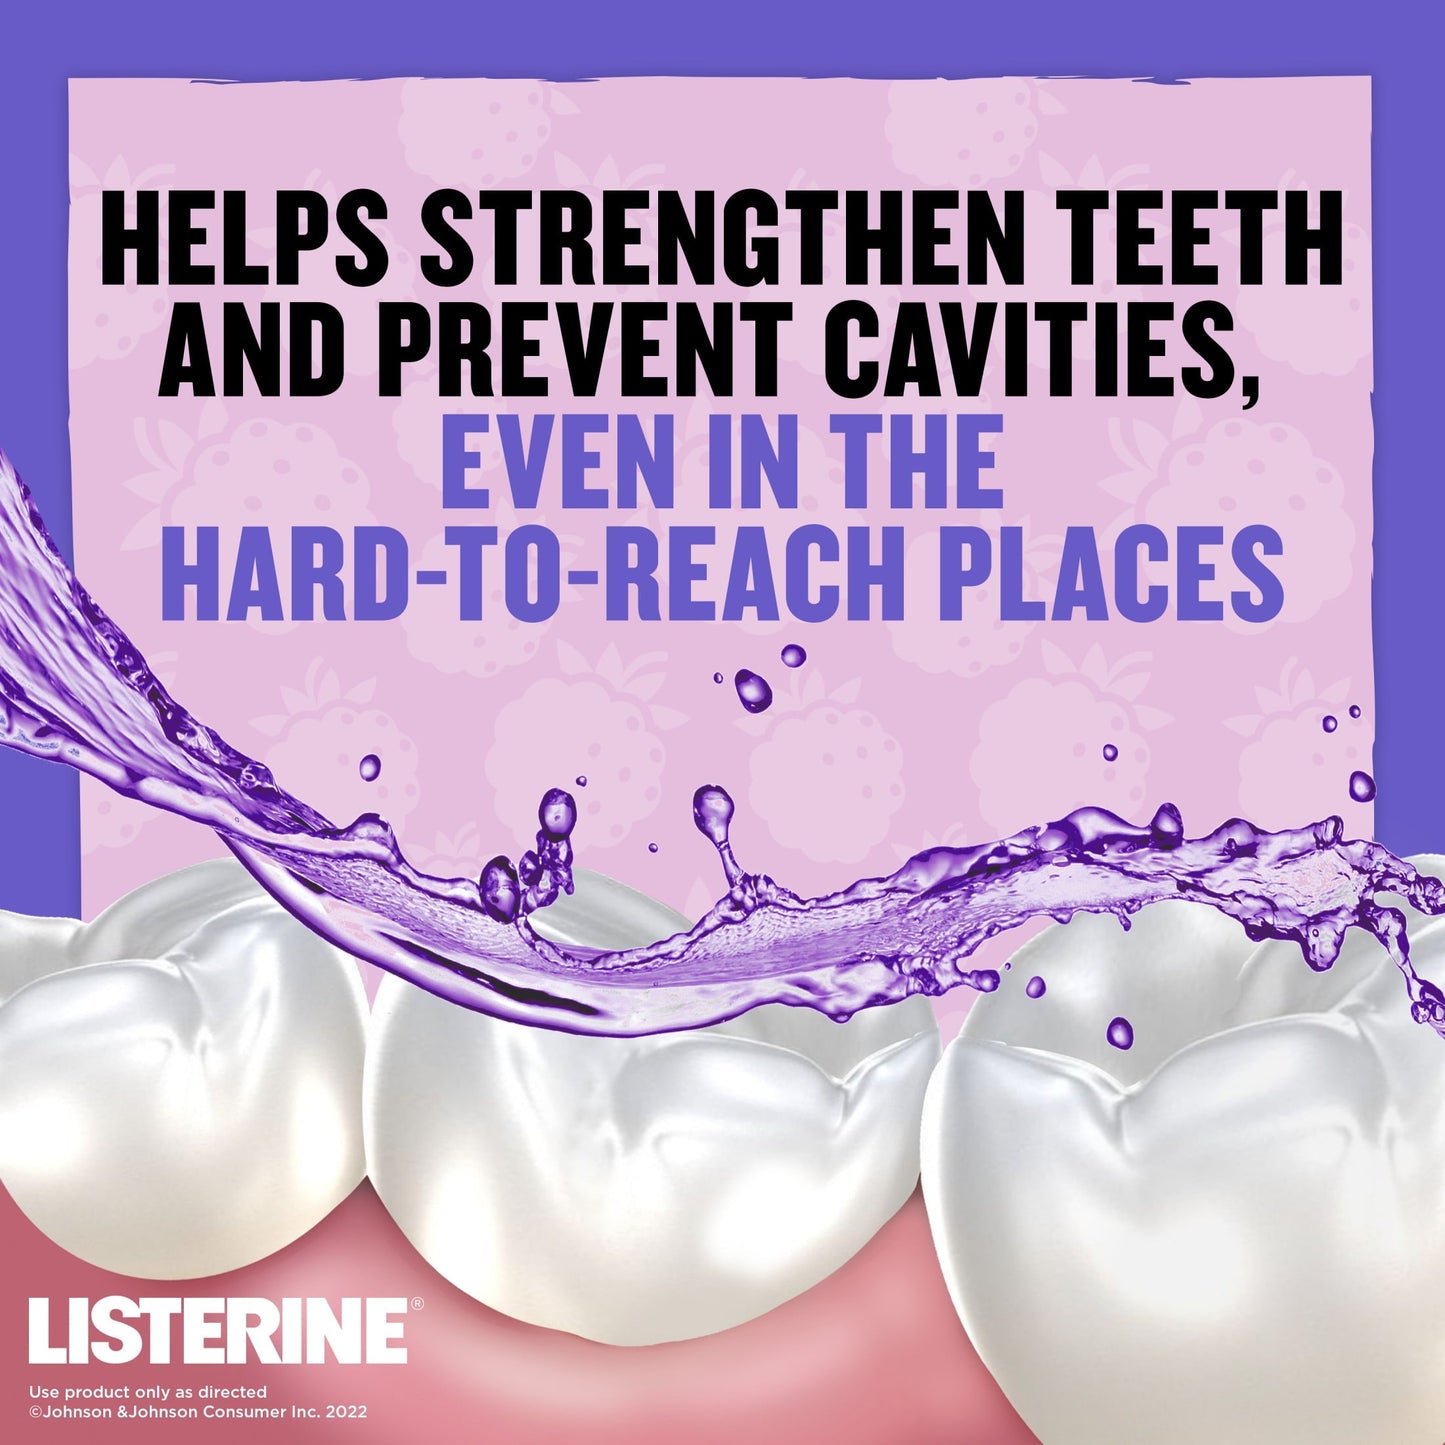 Listerine Smart Rinse Kids Anticavity Mouthwash, Berry Splash, 500 mL